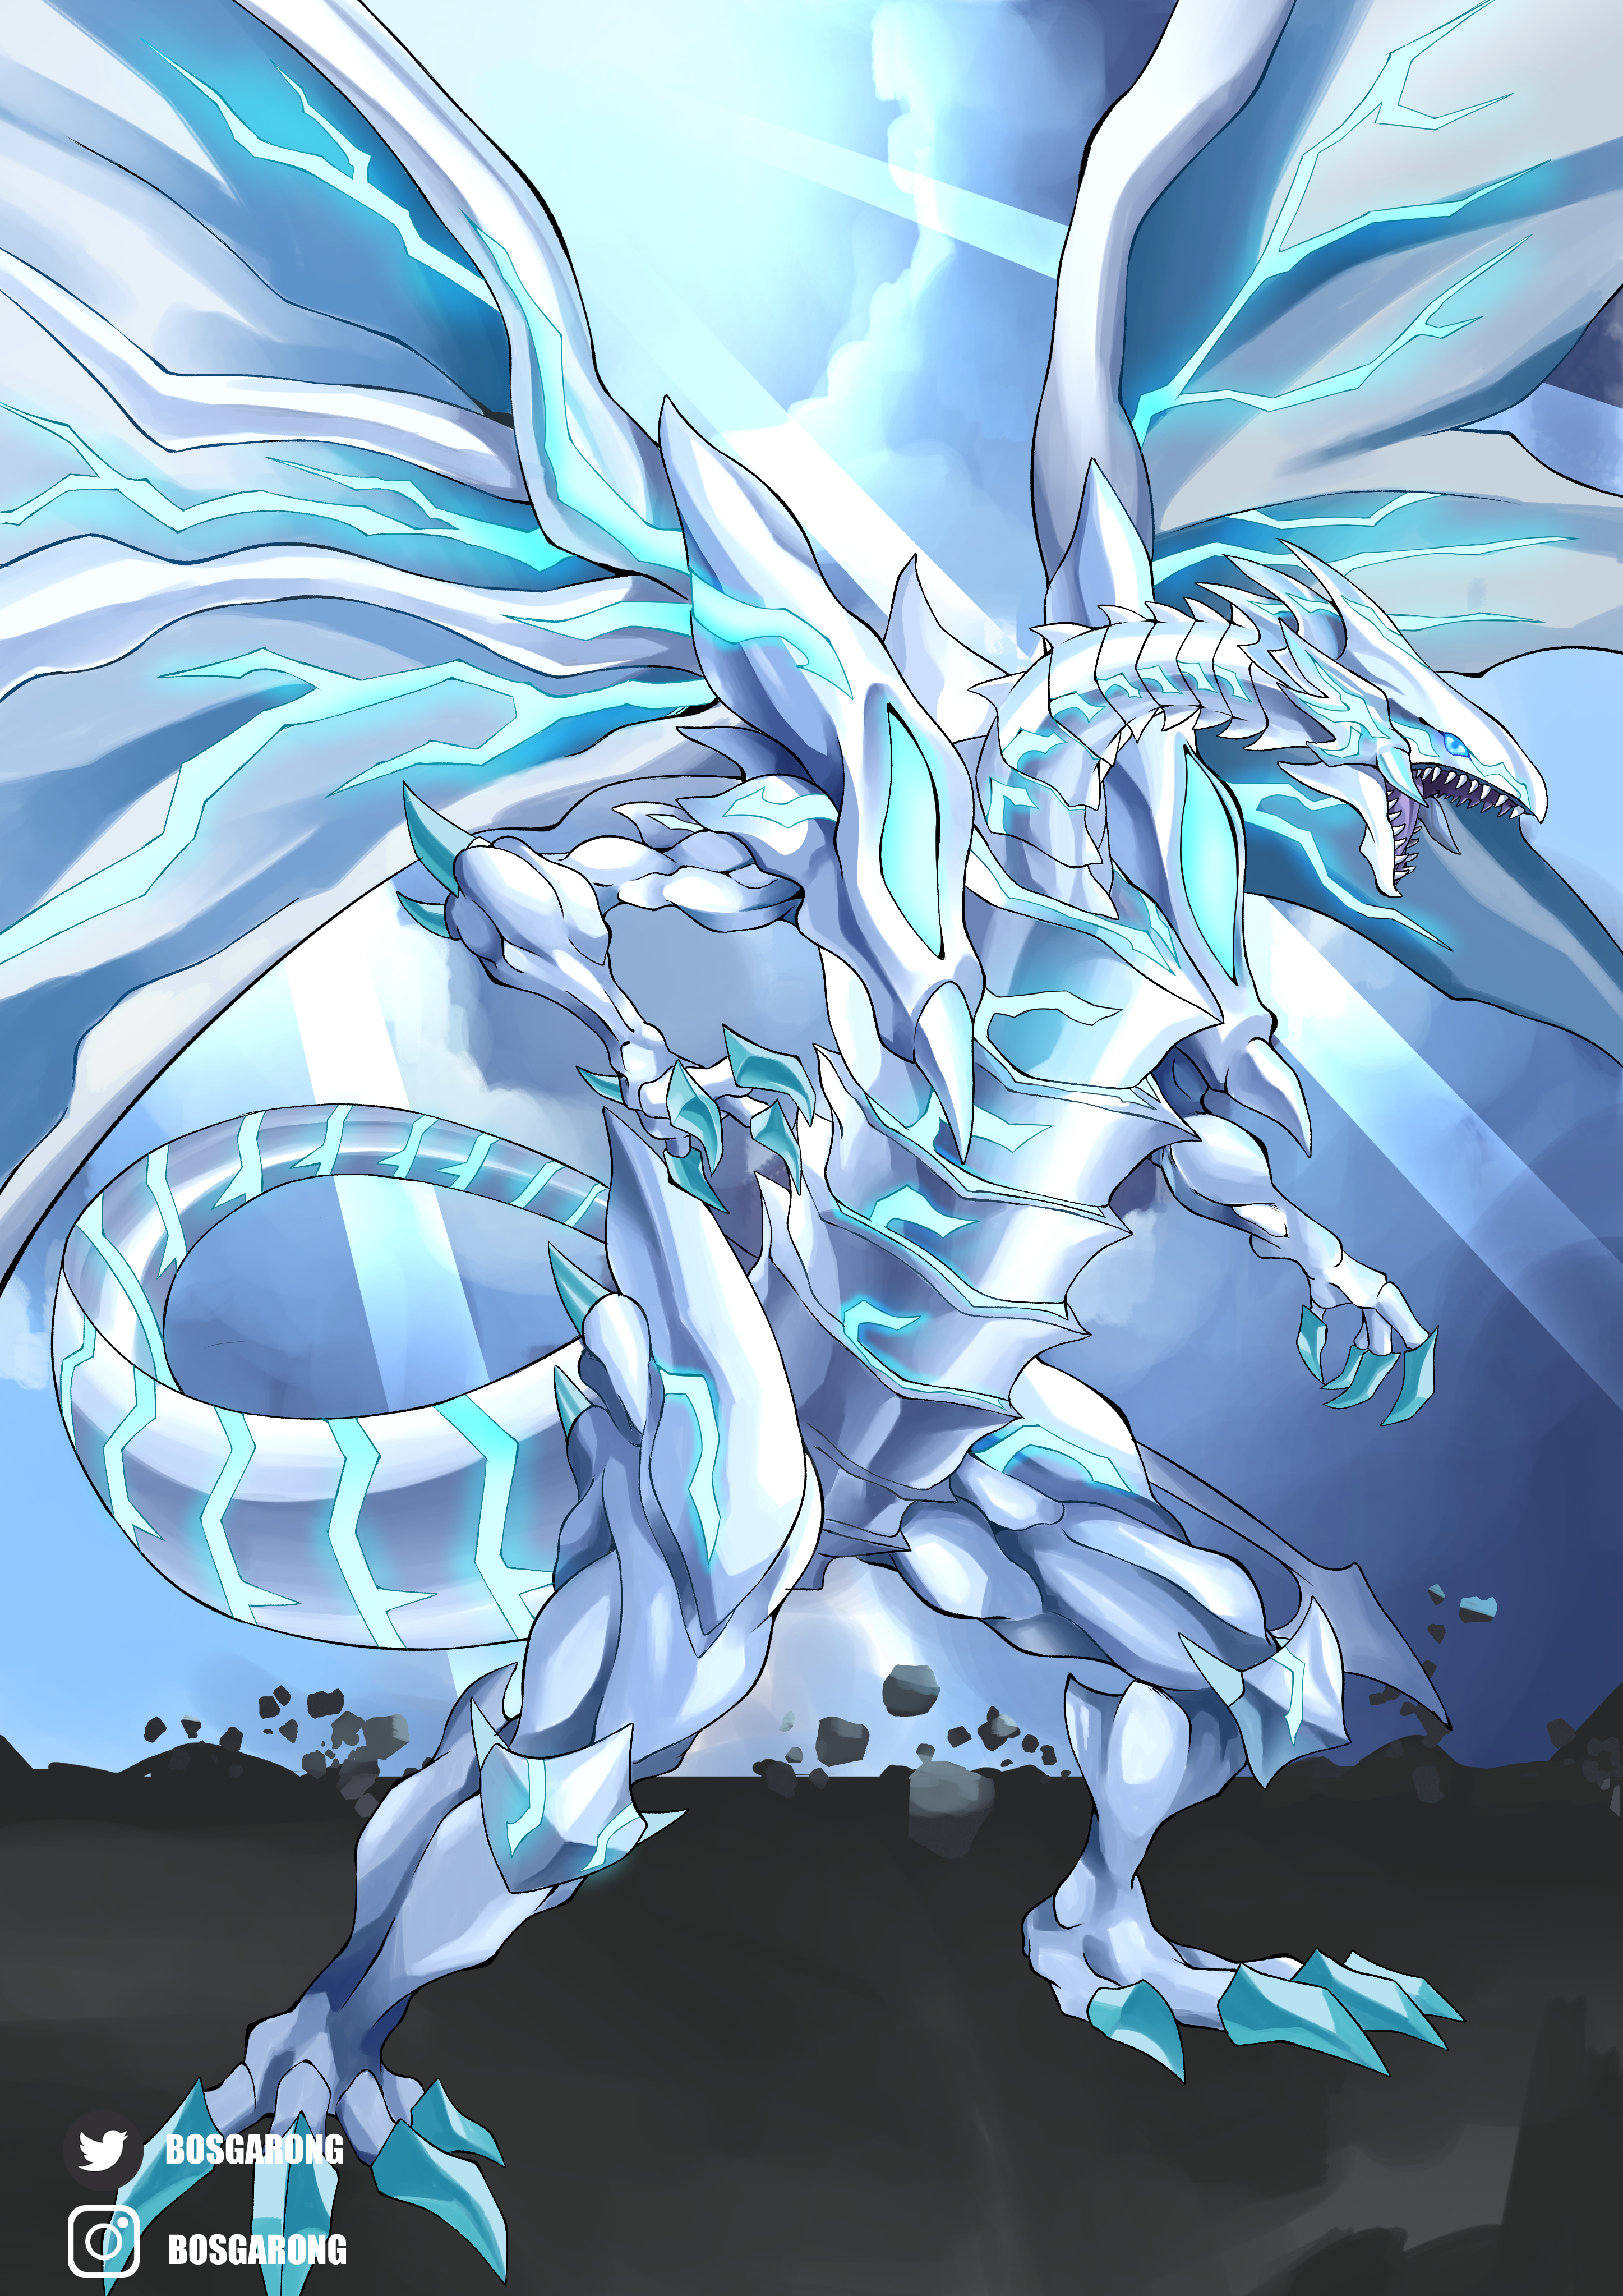 white dragon - Other & Anime Background Wallpapers on Desktop Nexus (Image  423816)